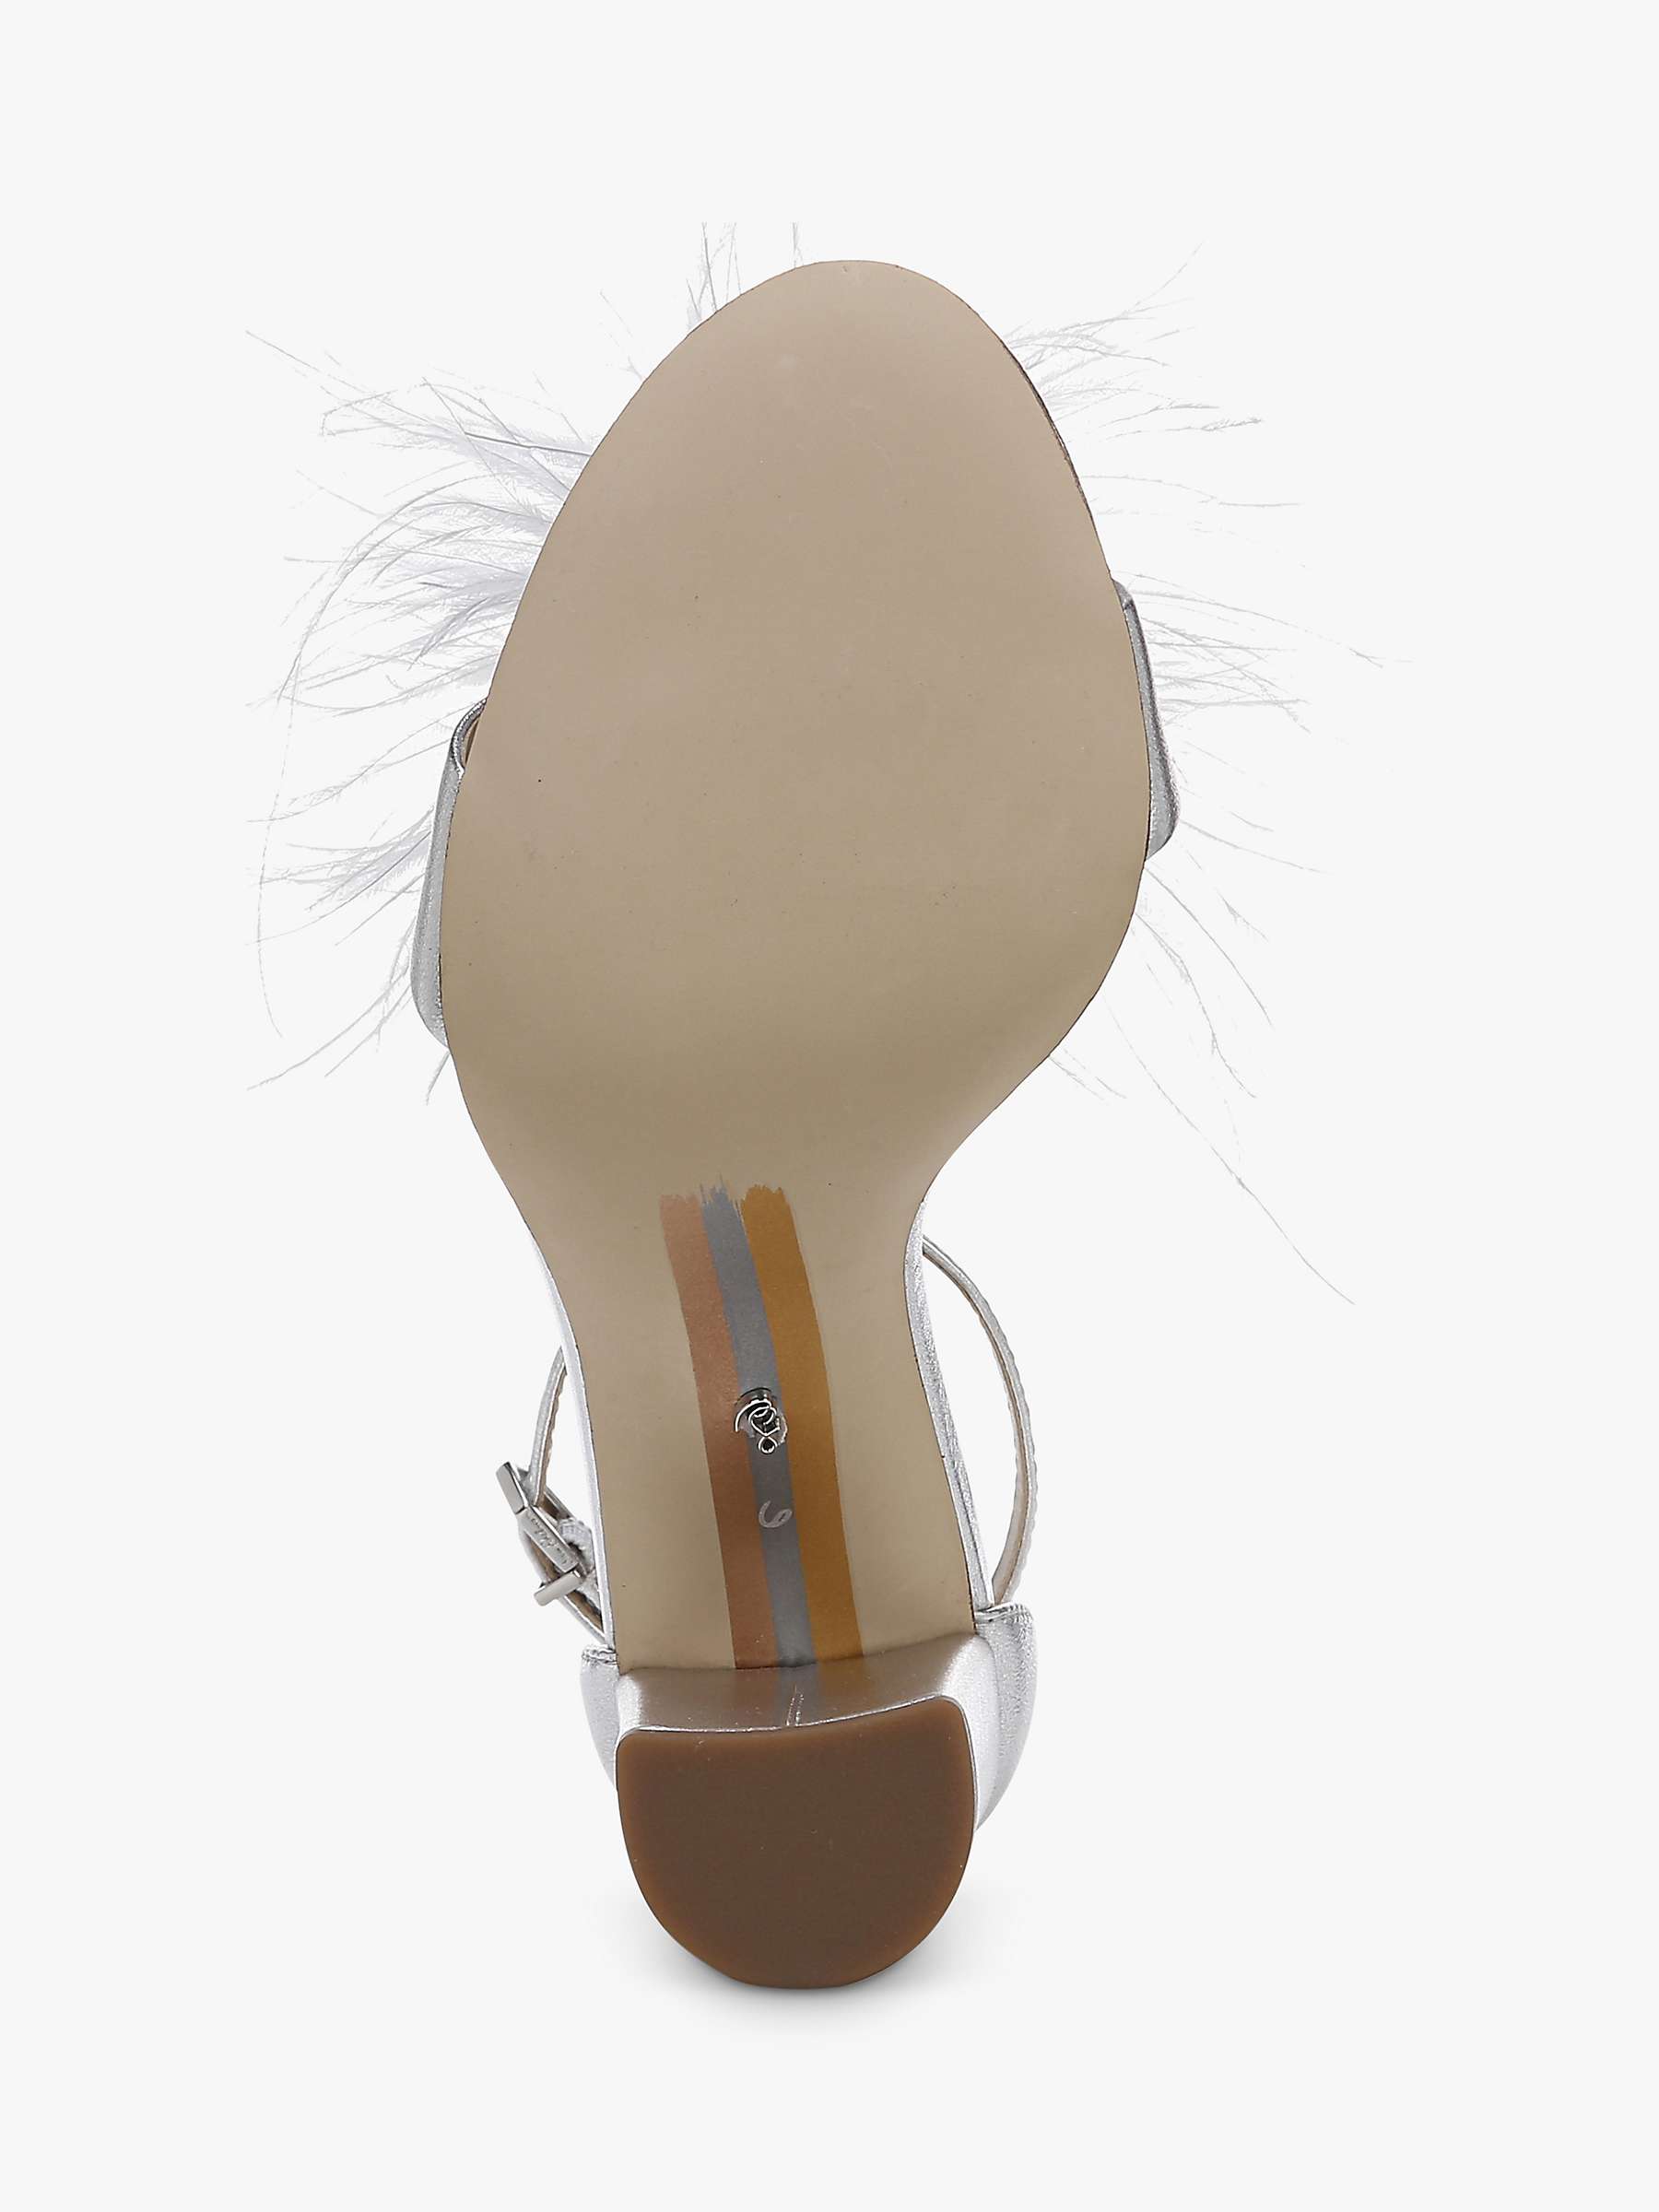 Buy Sam Edelman Yaro Feather Block Heeled Sandals, Silver Online at johnlewis.com